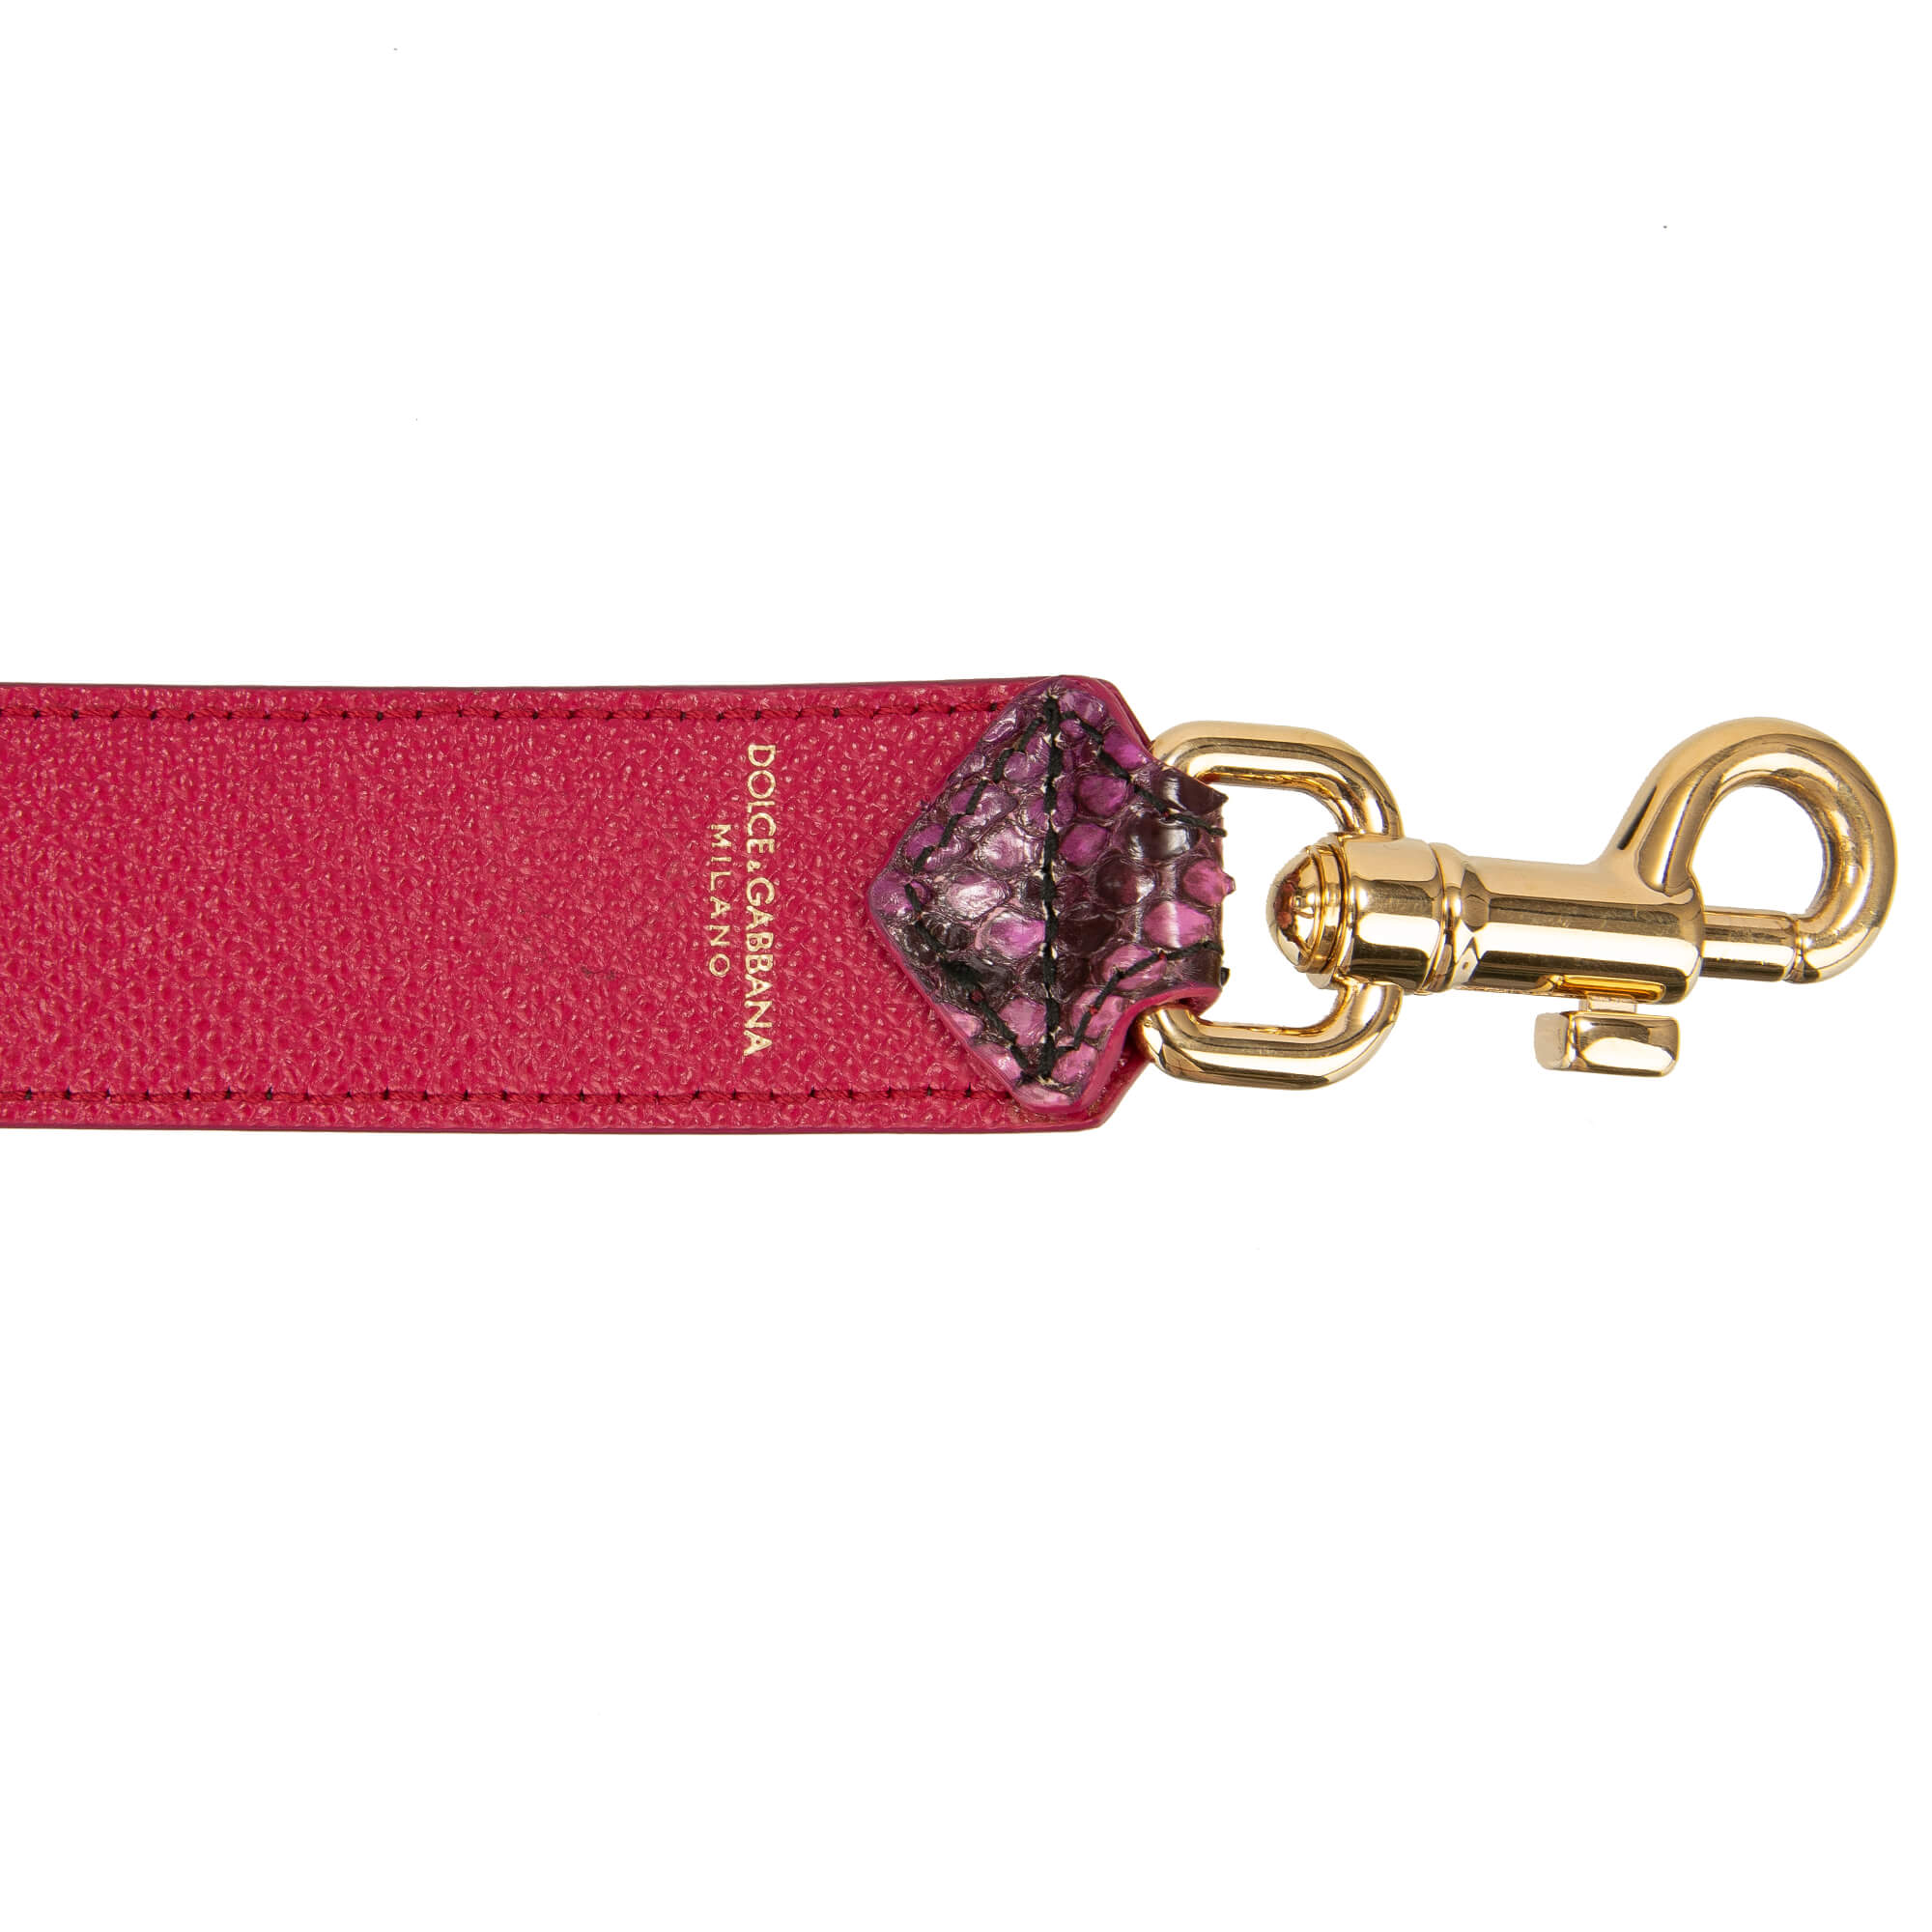 Dolce & Gabbana Studded Leather Bag Strap Handle Beige Red Gold